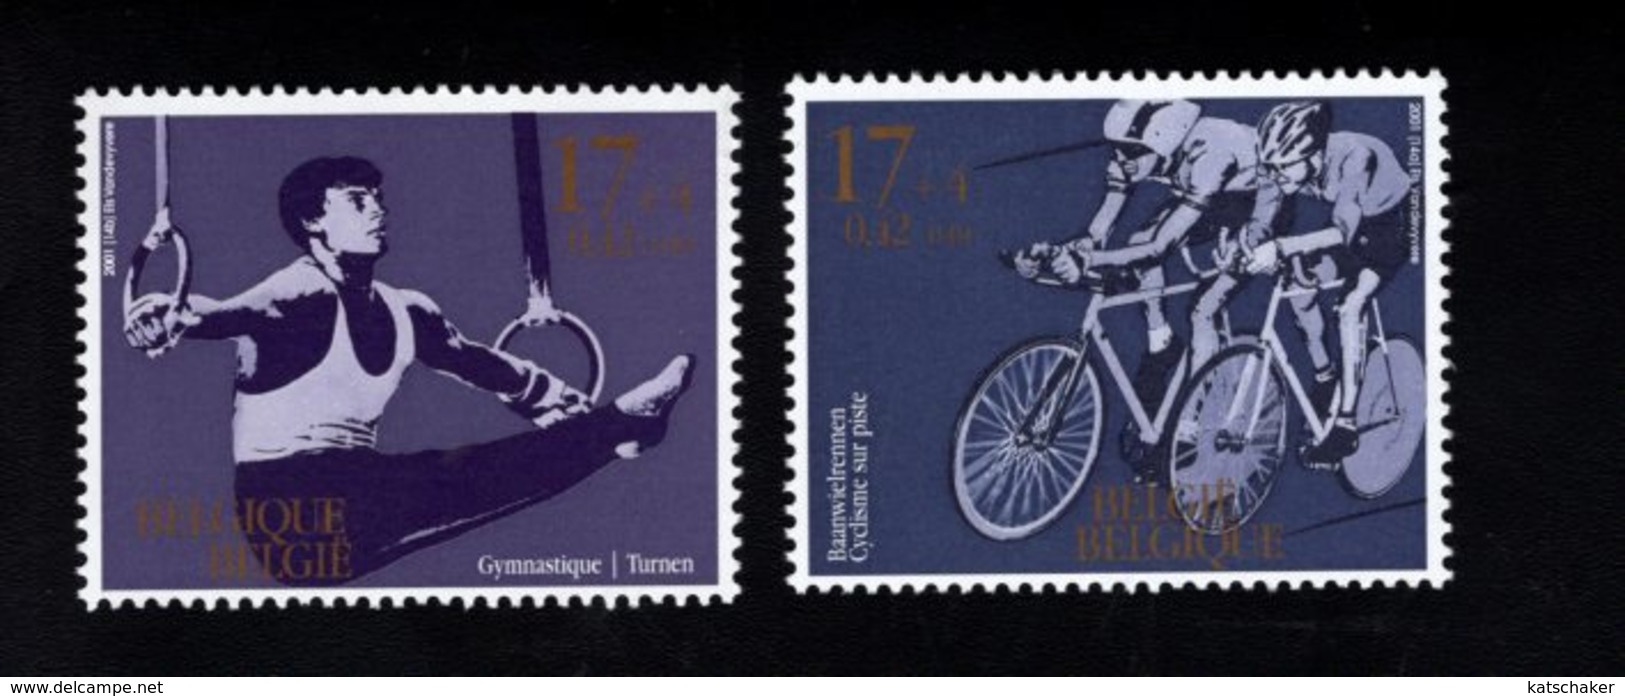 701578513 BELGIE POSTFRIS MINT NEVER HINGED POSTFRISCH EINWANDFREI  OCB 3012 3013 SPORT CYCLISME GYMNASTIEK - Unused Stamps